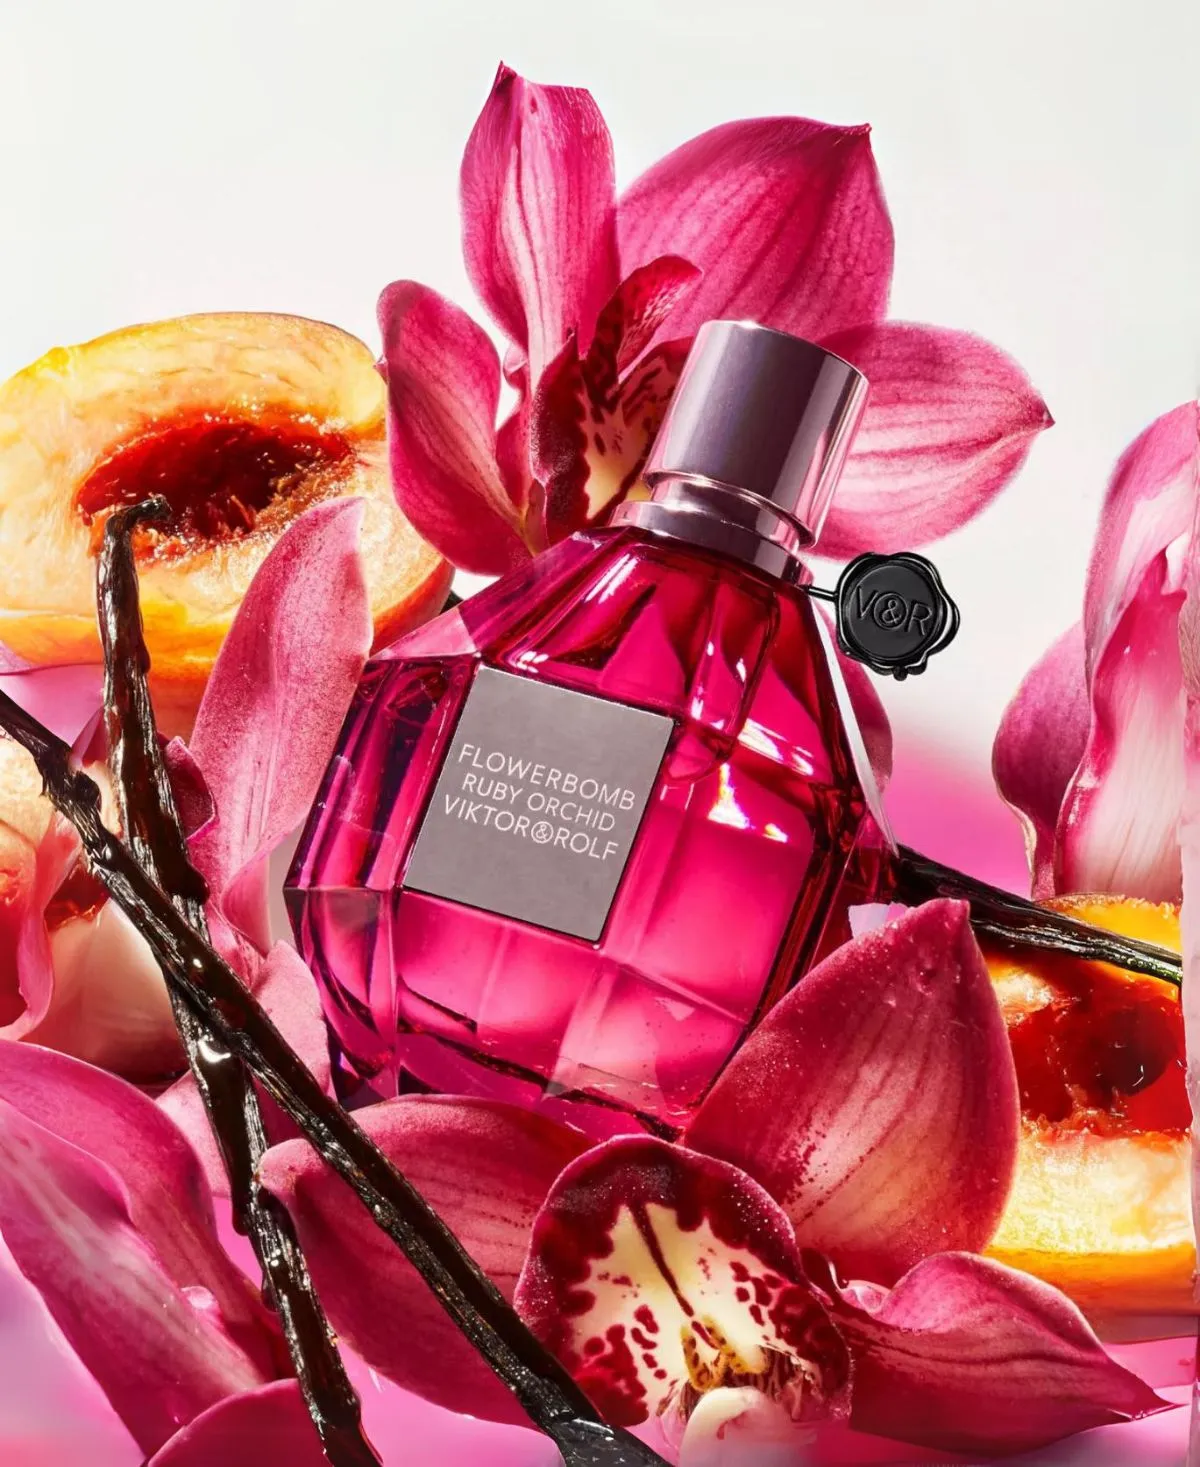 Viktor & Rolf Flowerbomb Ruby Orchid for Women Eau de Parfum (EDP) Spray